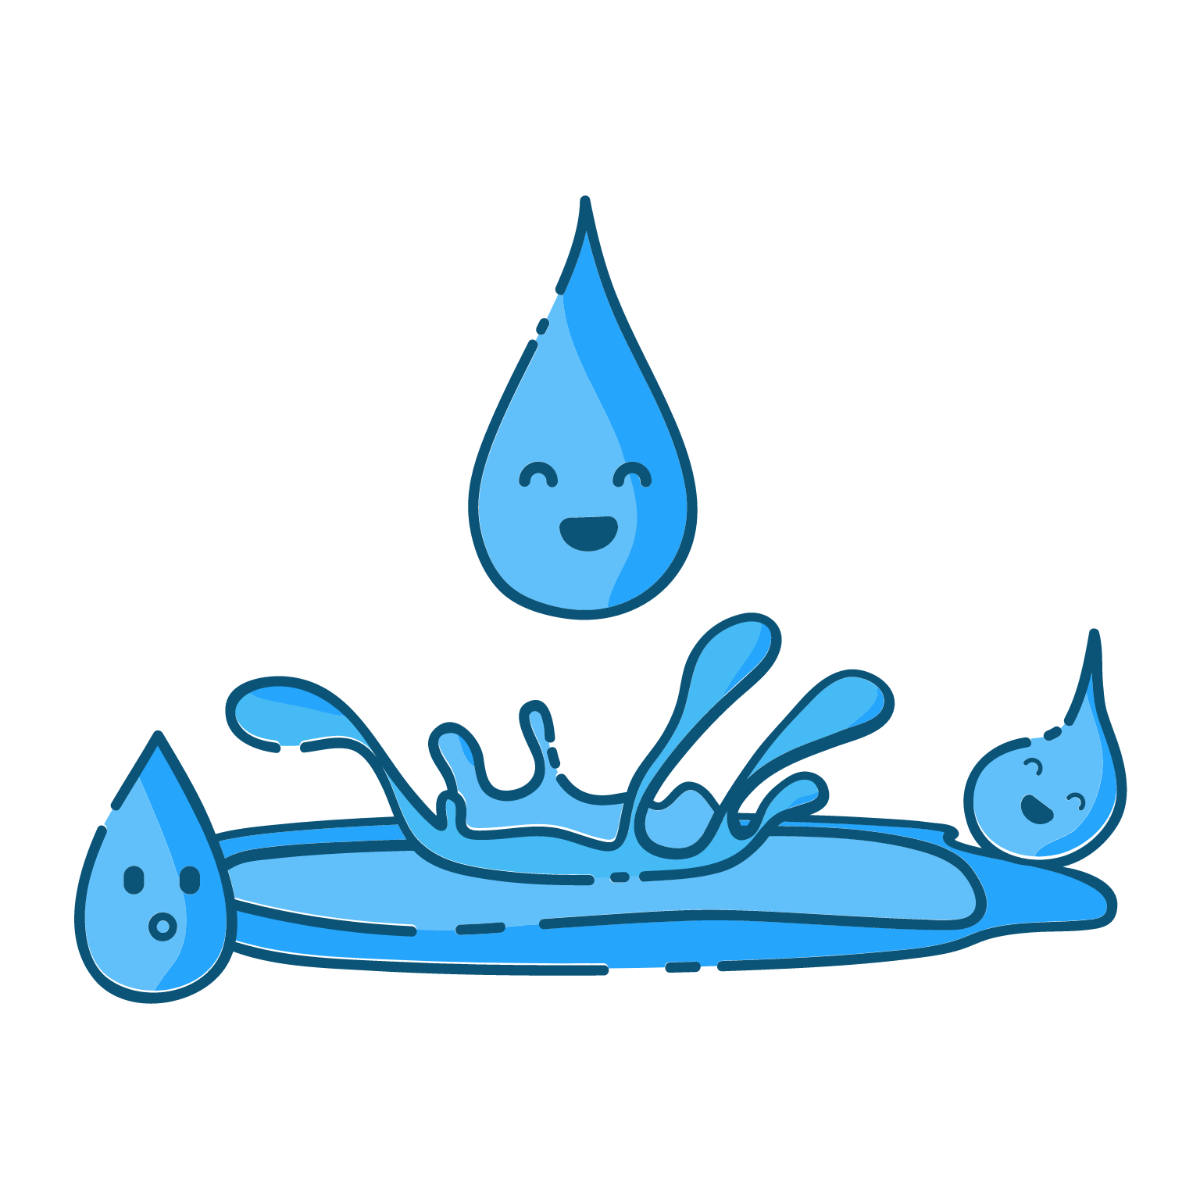 Free Tribal Water Vector - Download in Illustrator, EPS, SVG, JPG